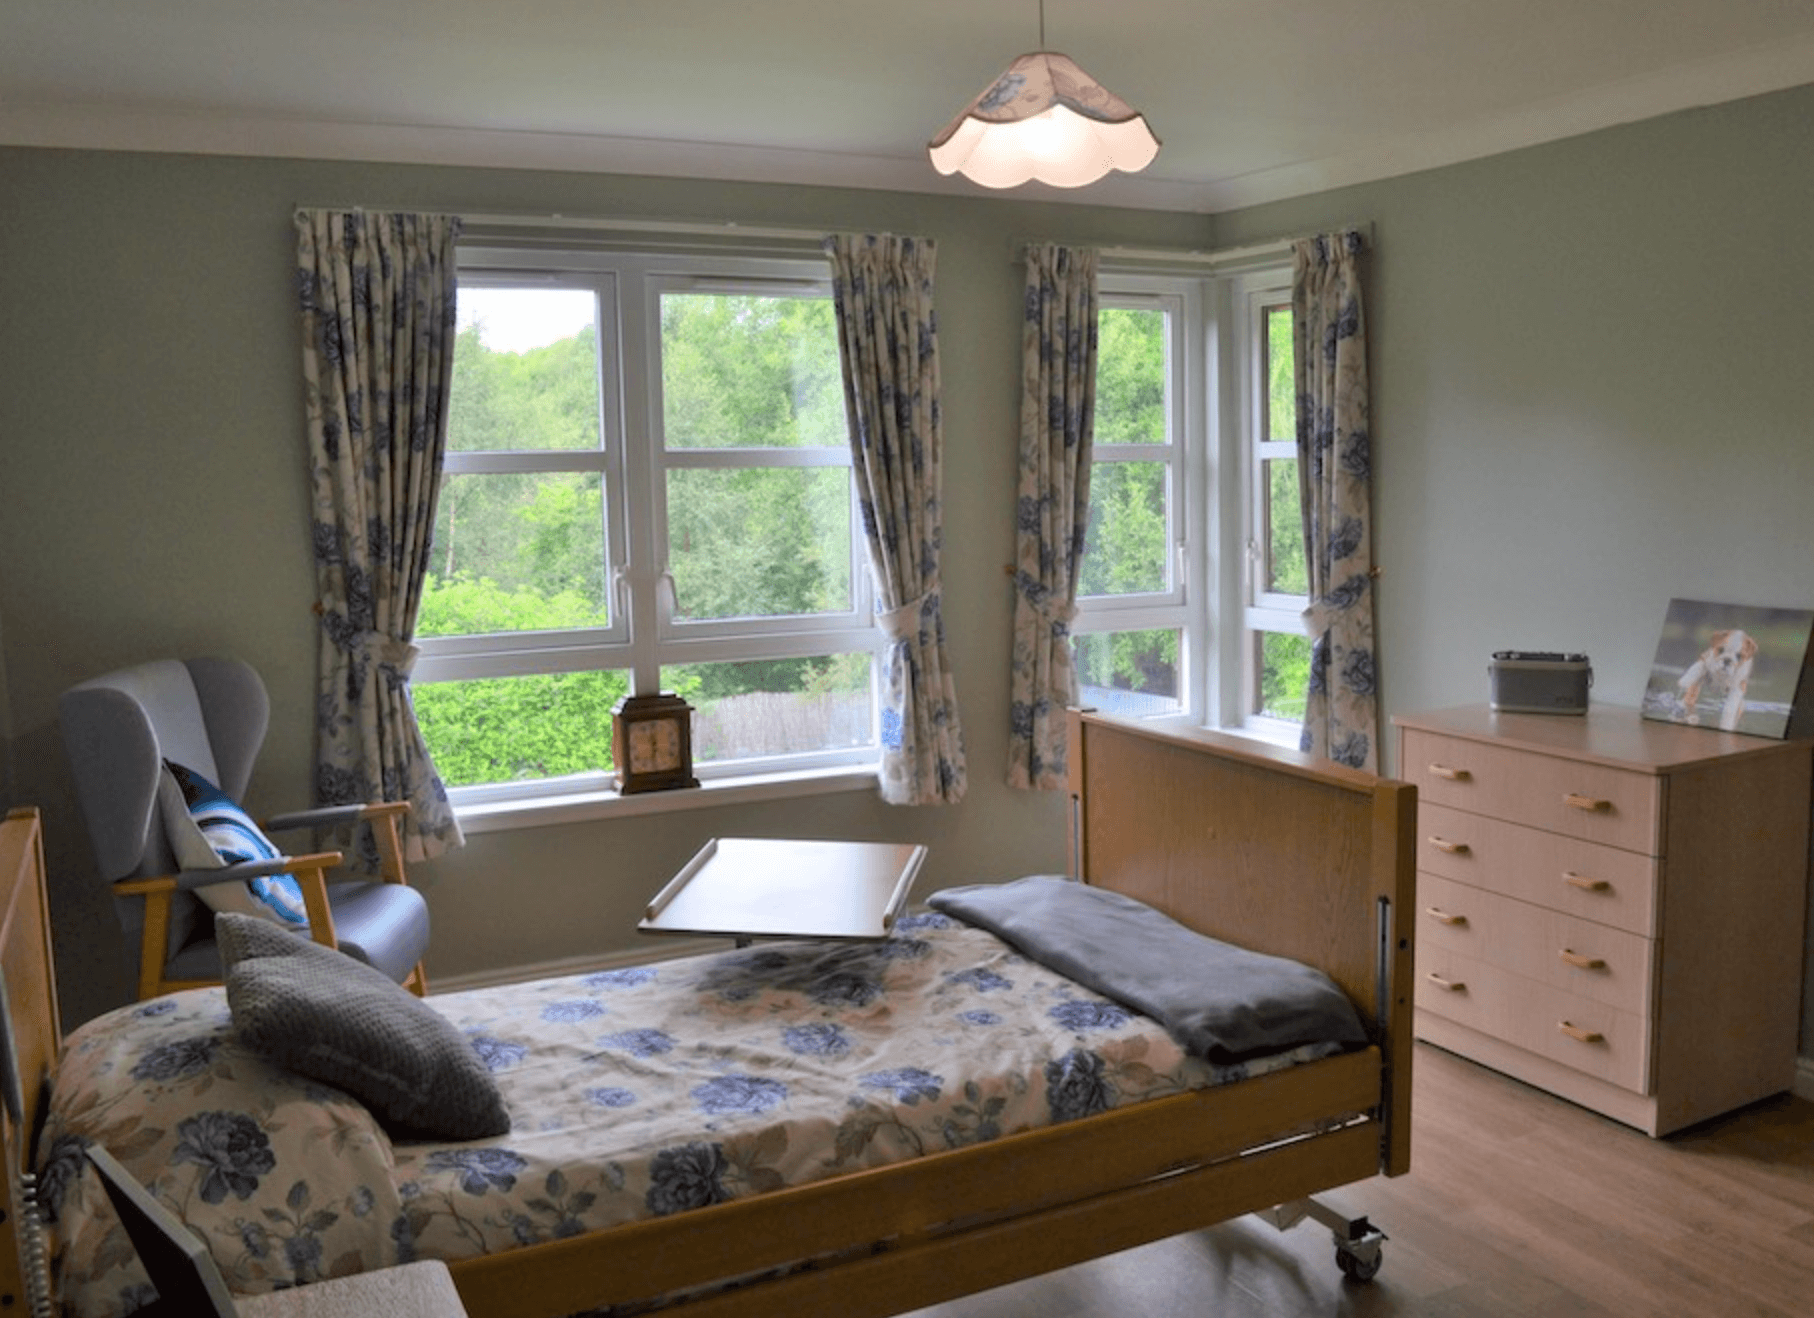 Bedroom of Elderslie Care Home in Paisley, Scotland